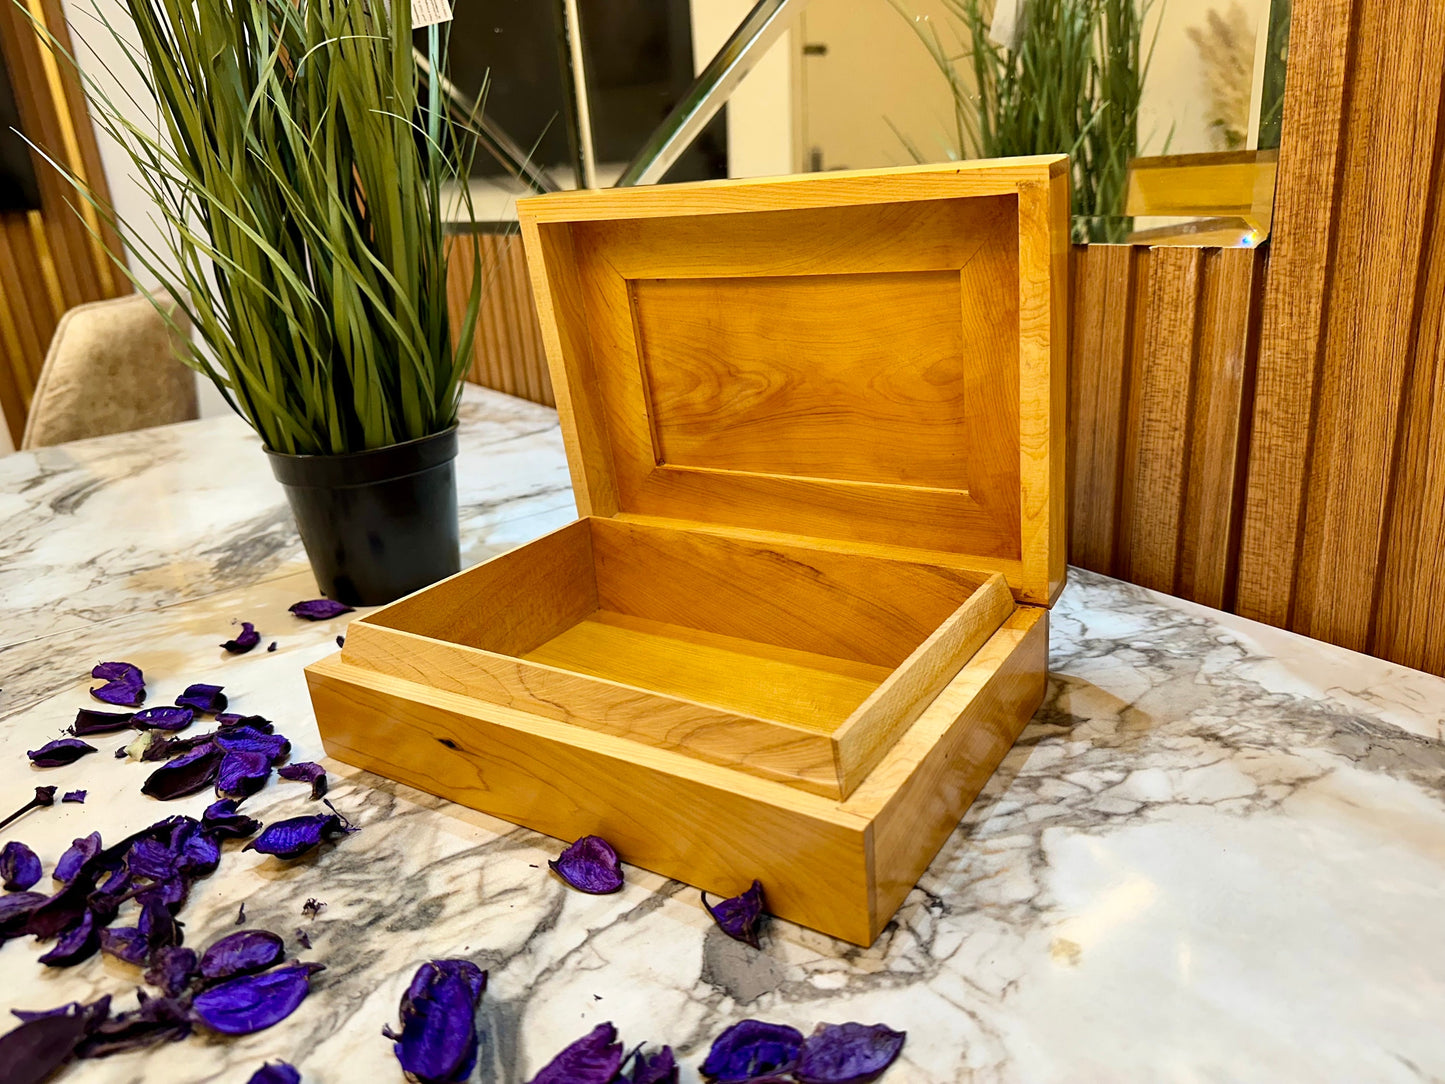 10"x7" Jewellery wooden Box,Moroccan handmade gift cedar box,keepsake couples gift,wedding memory box